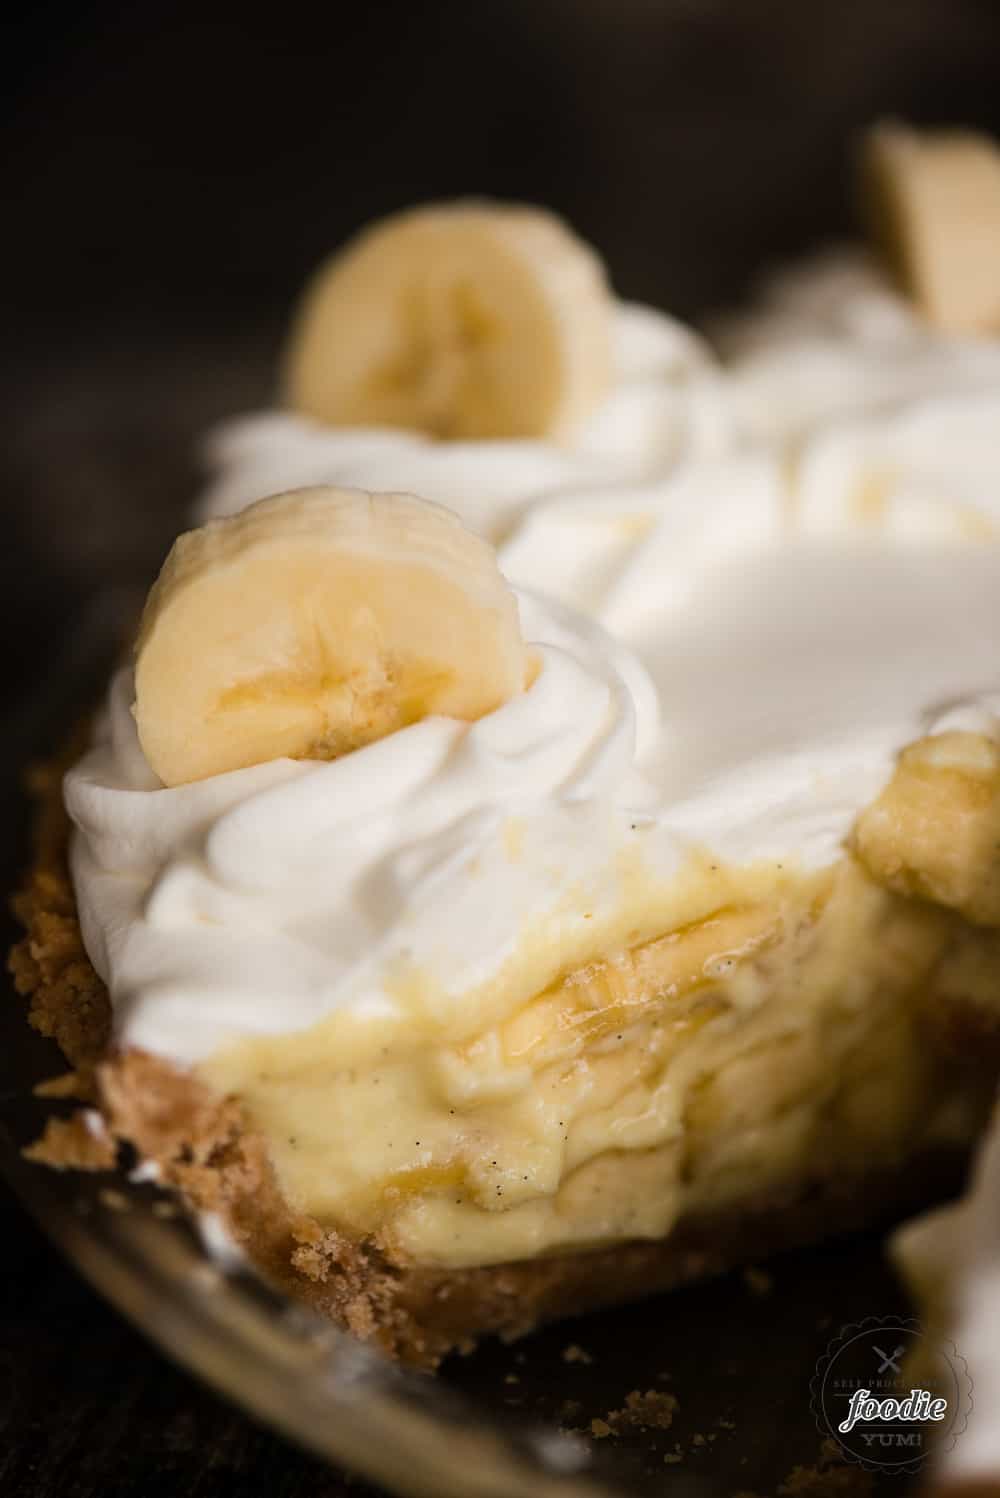 Banana Cream Pie with nilla wafer crust